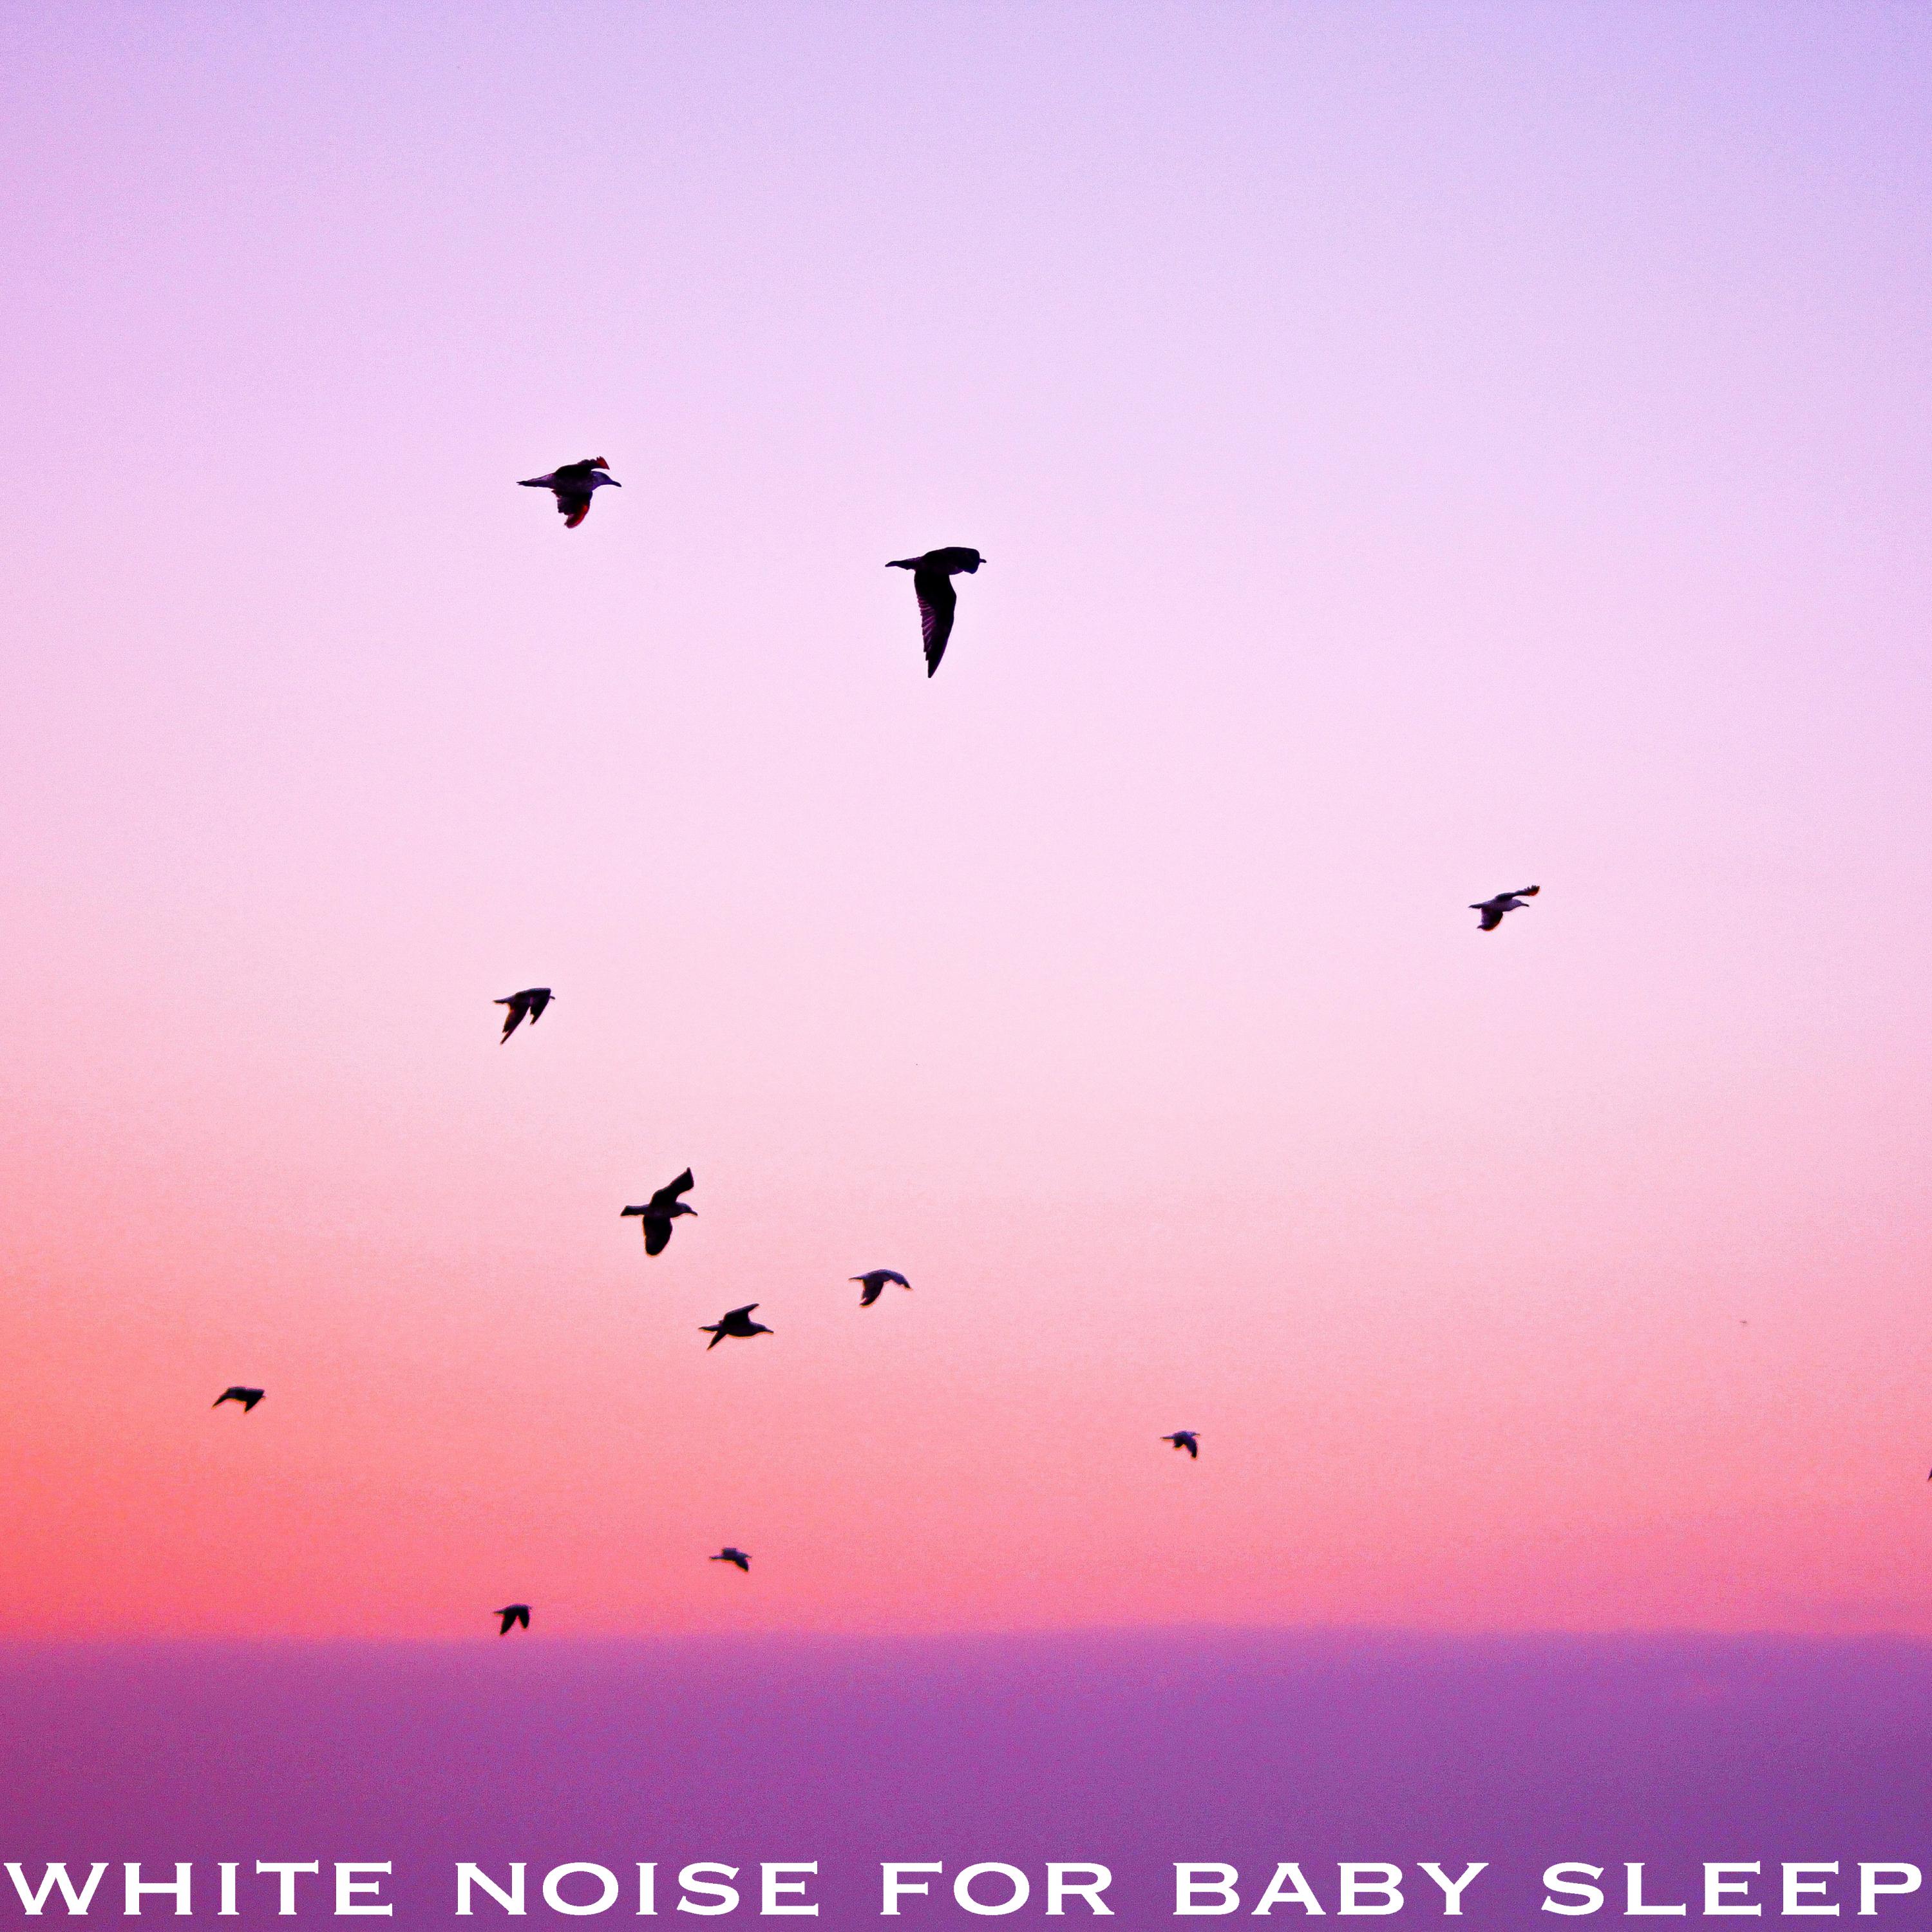 White Noise For Baby Sleep